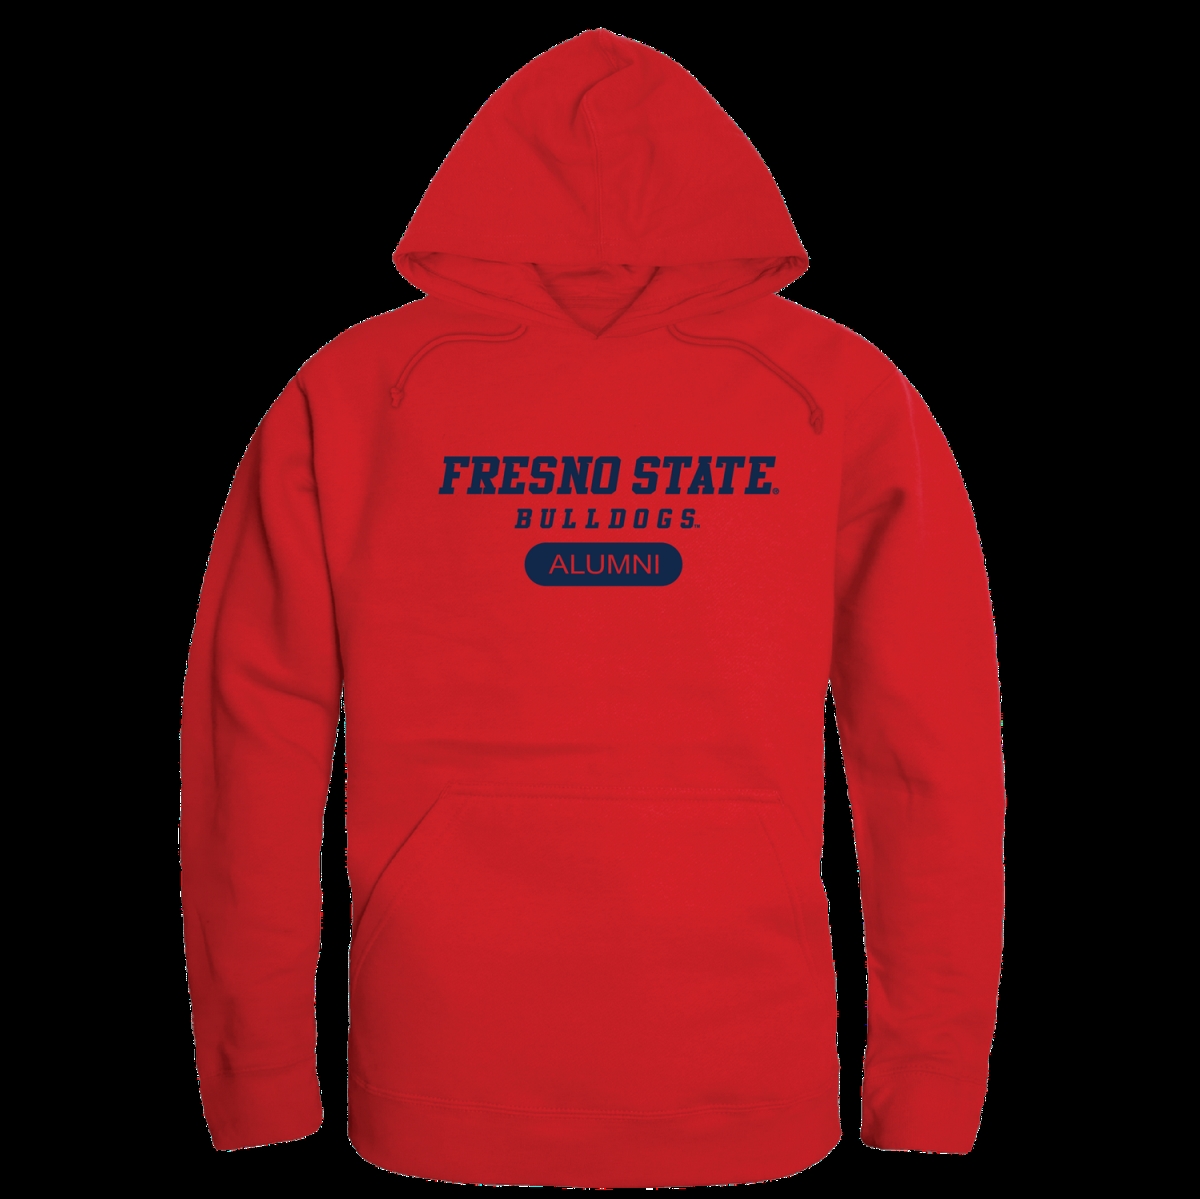 561-169-RED-02 California State University, Fresno Bulldogs Alumni Hoodie, Red - Medium -  W Republic